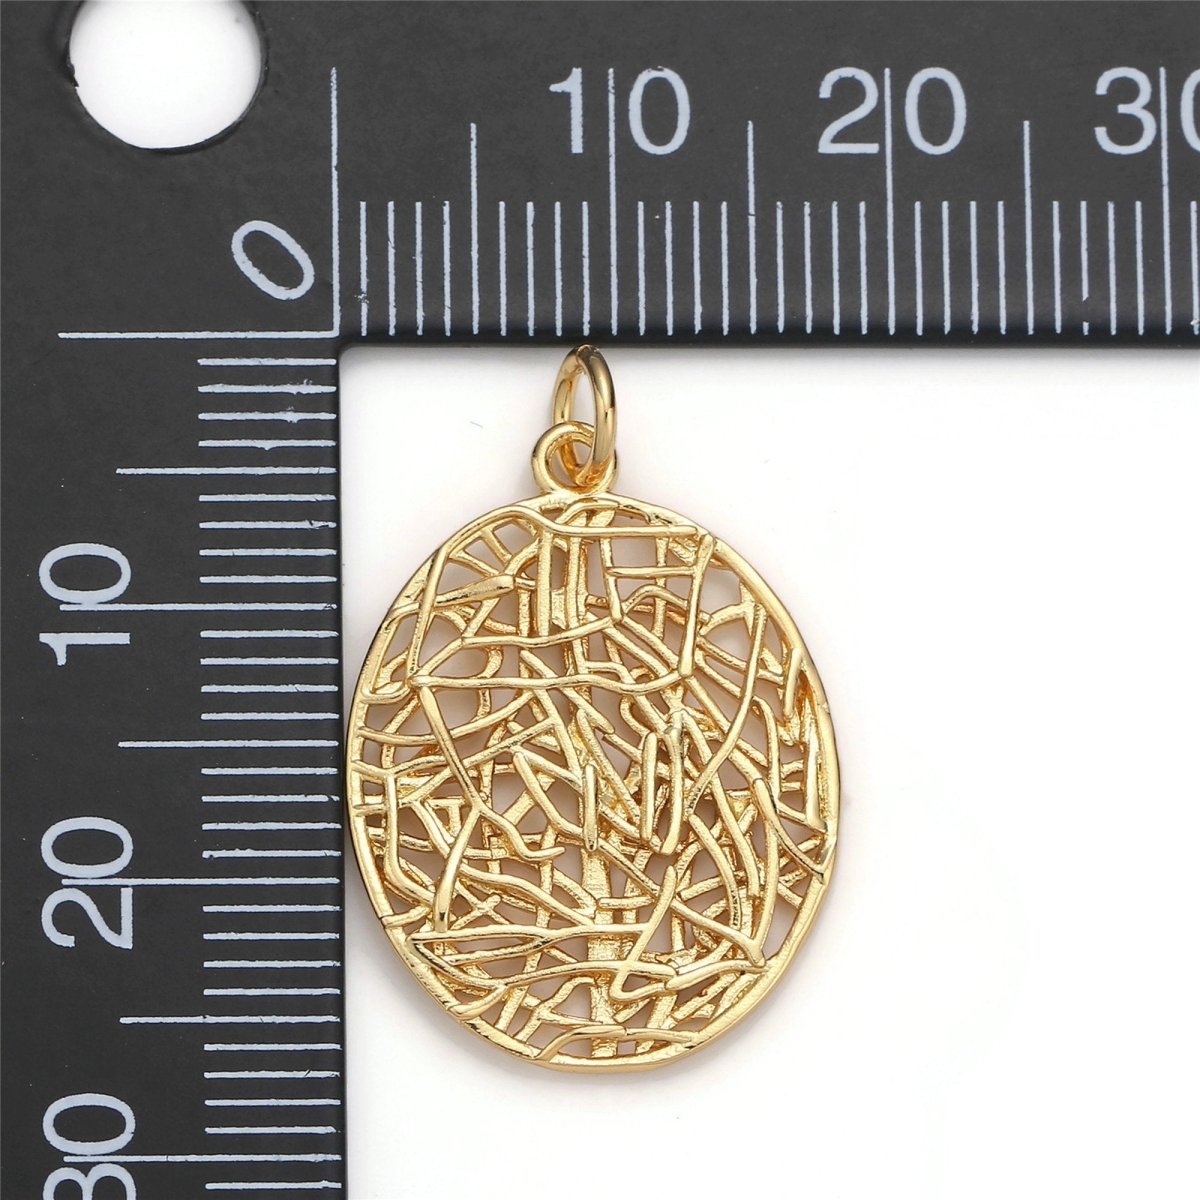 24k Gold Filled Patterned Oval Charm, Branch Paisley Pendant Charm, Gold Filled Charm, For DIY Jewelry, Gold Color D-057 - DLUXCA